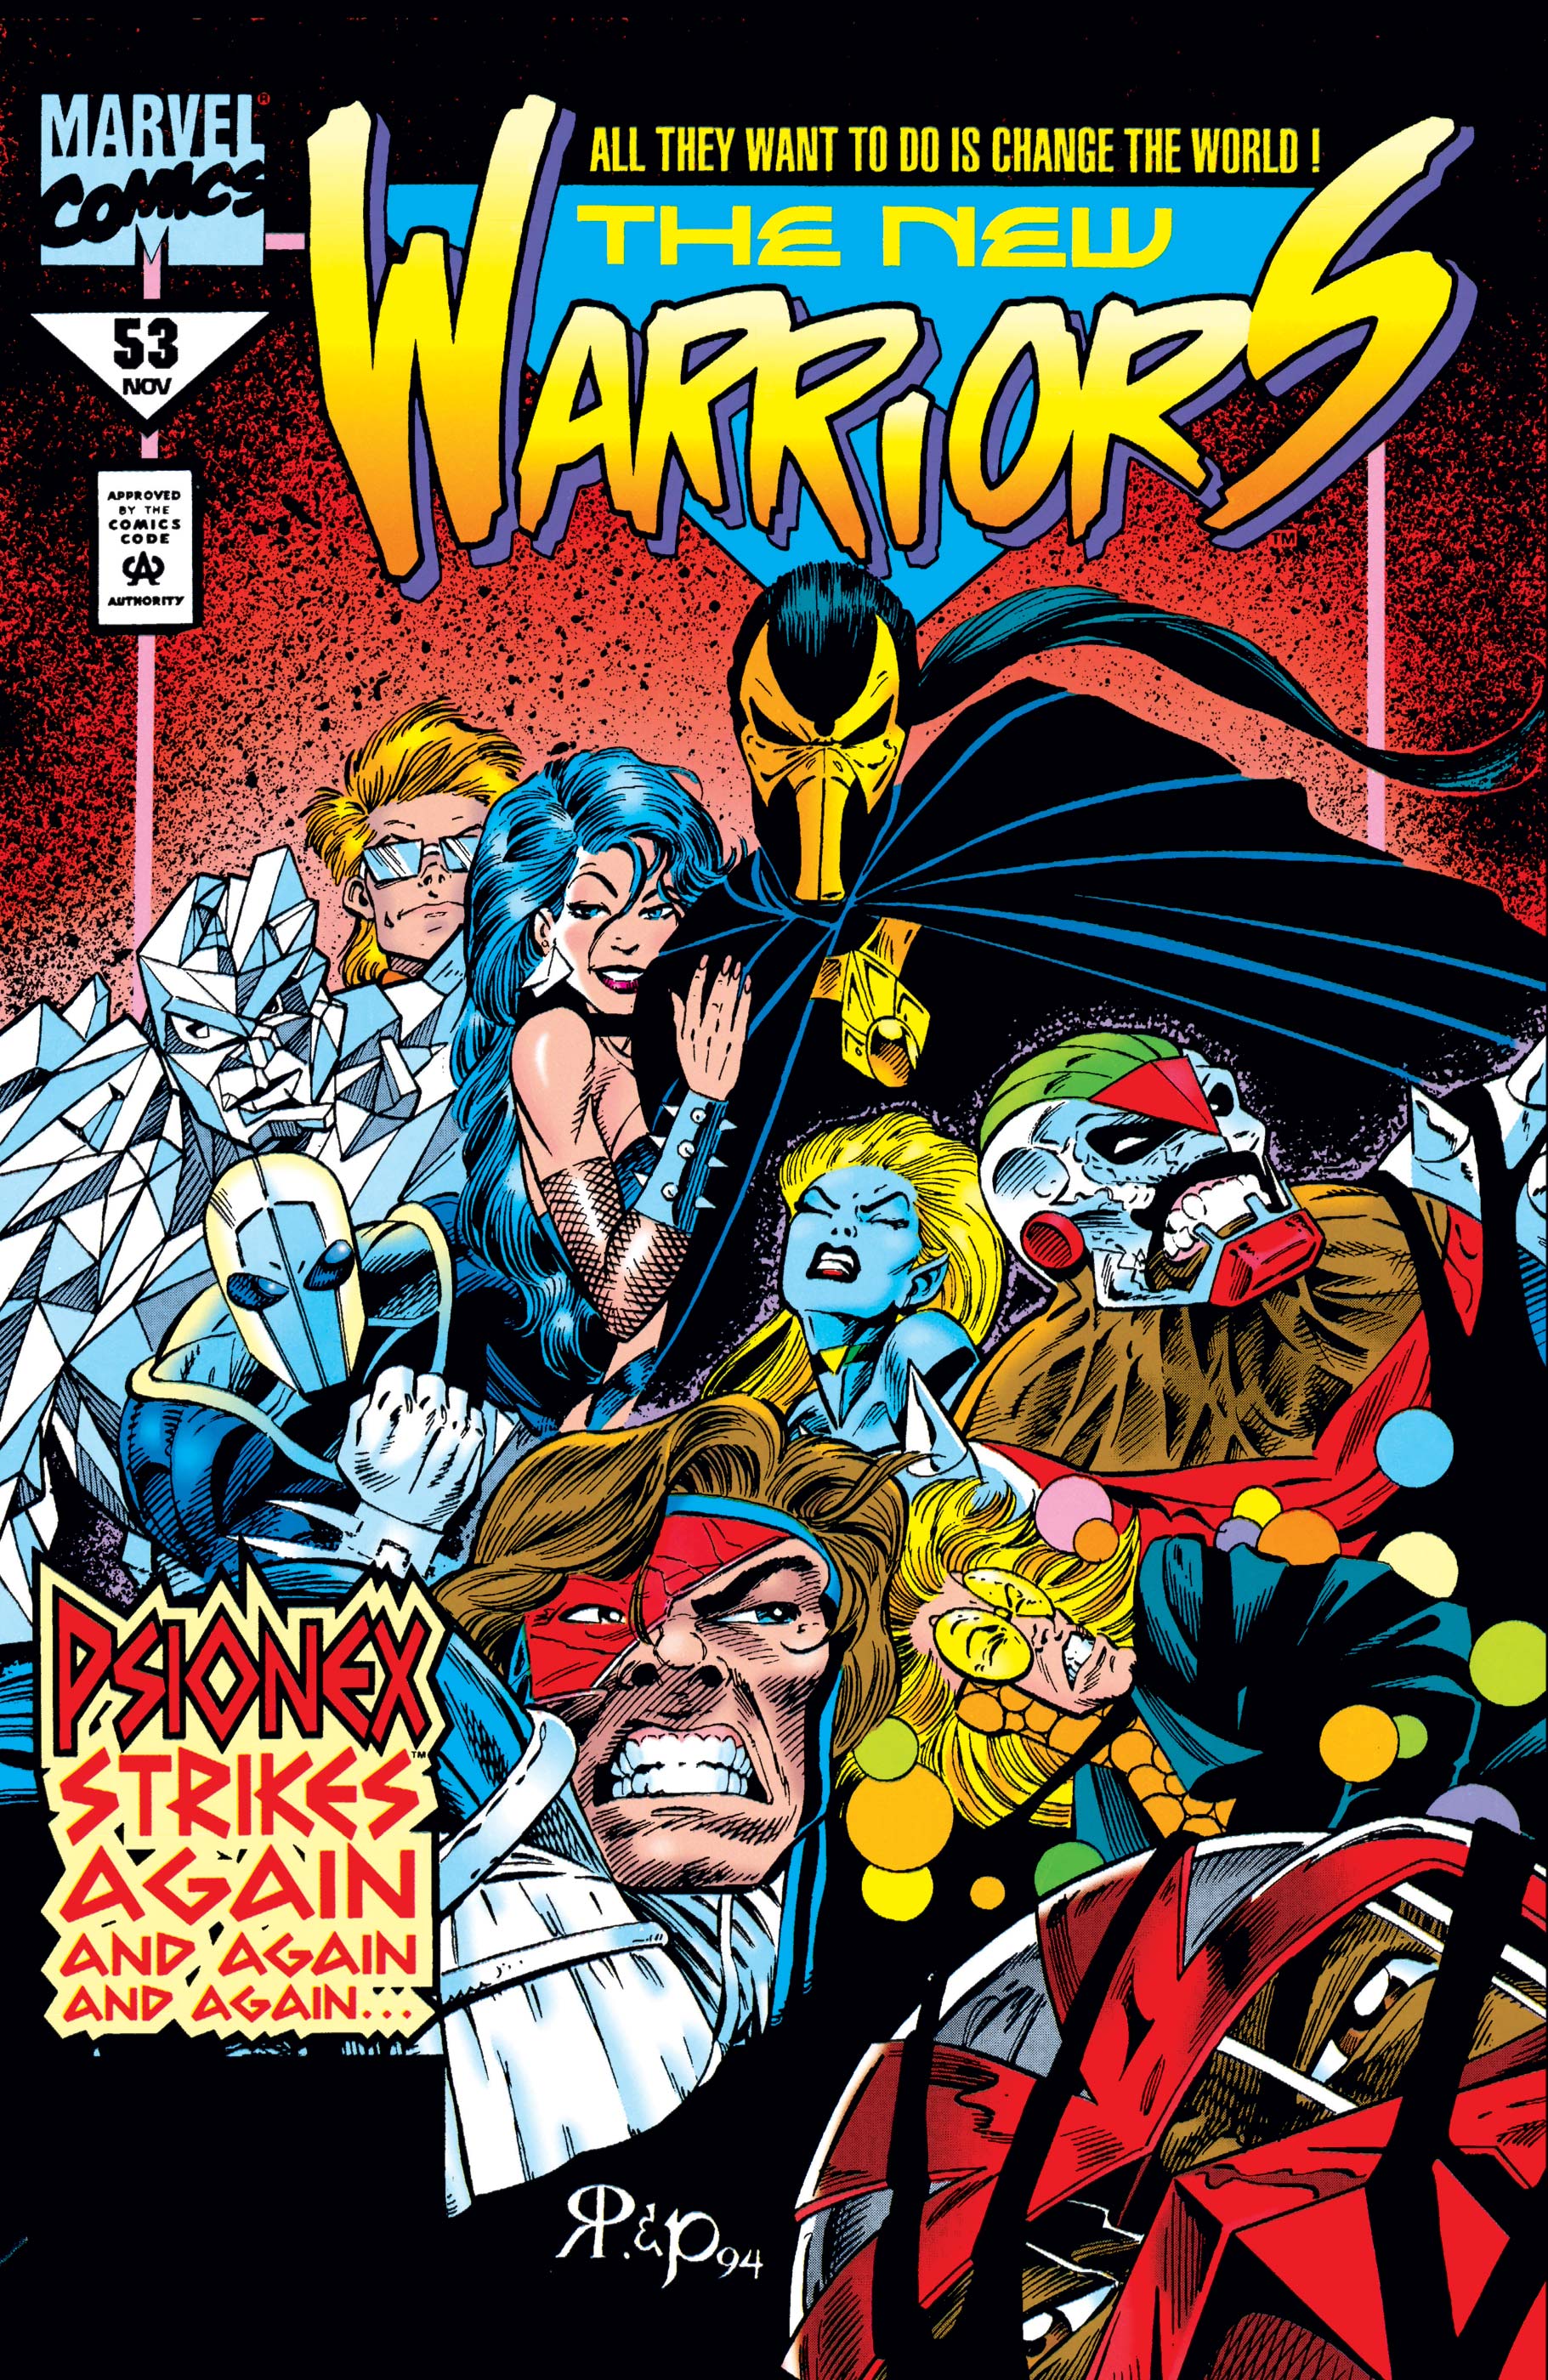 New Warriors (1990) #53